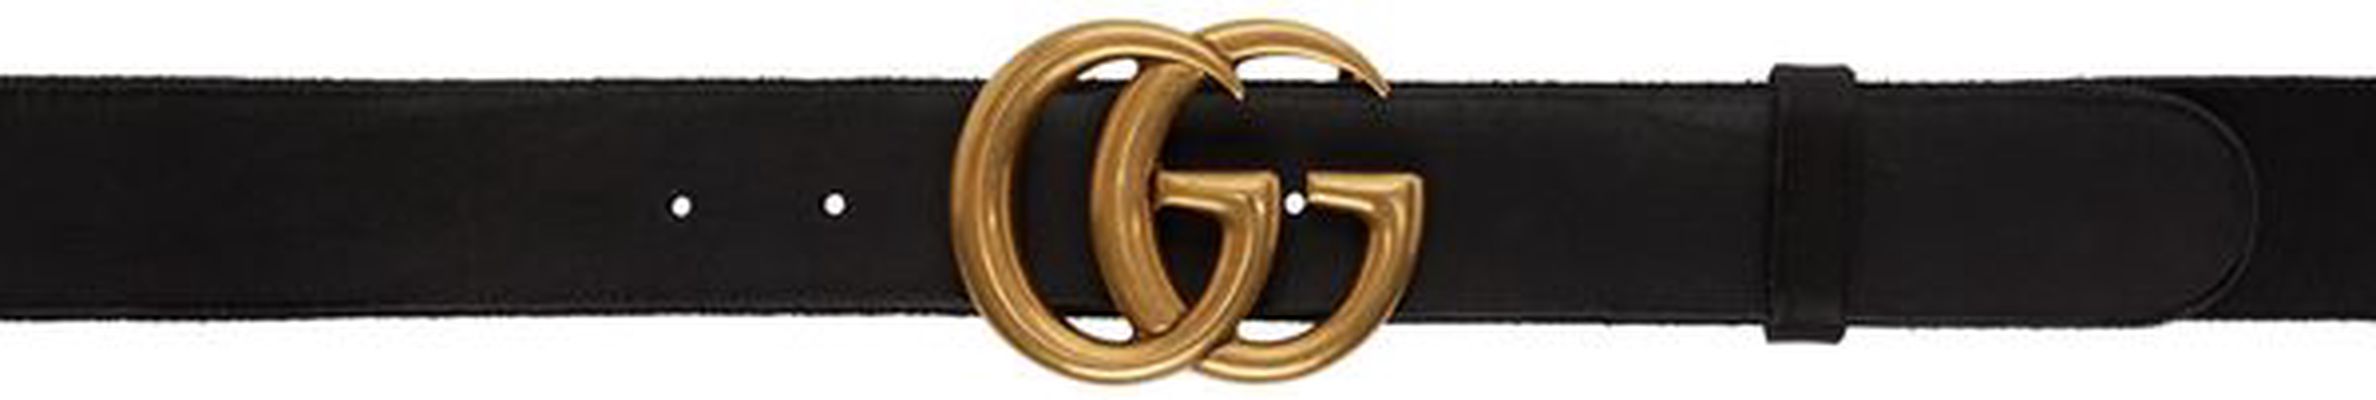 Gucci Black Toscano Leather GG Belt